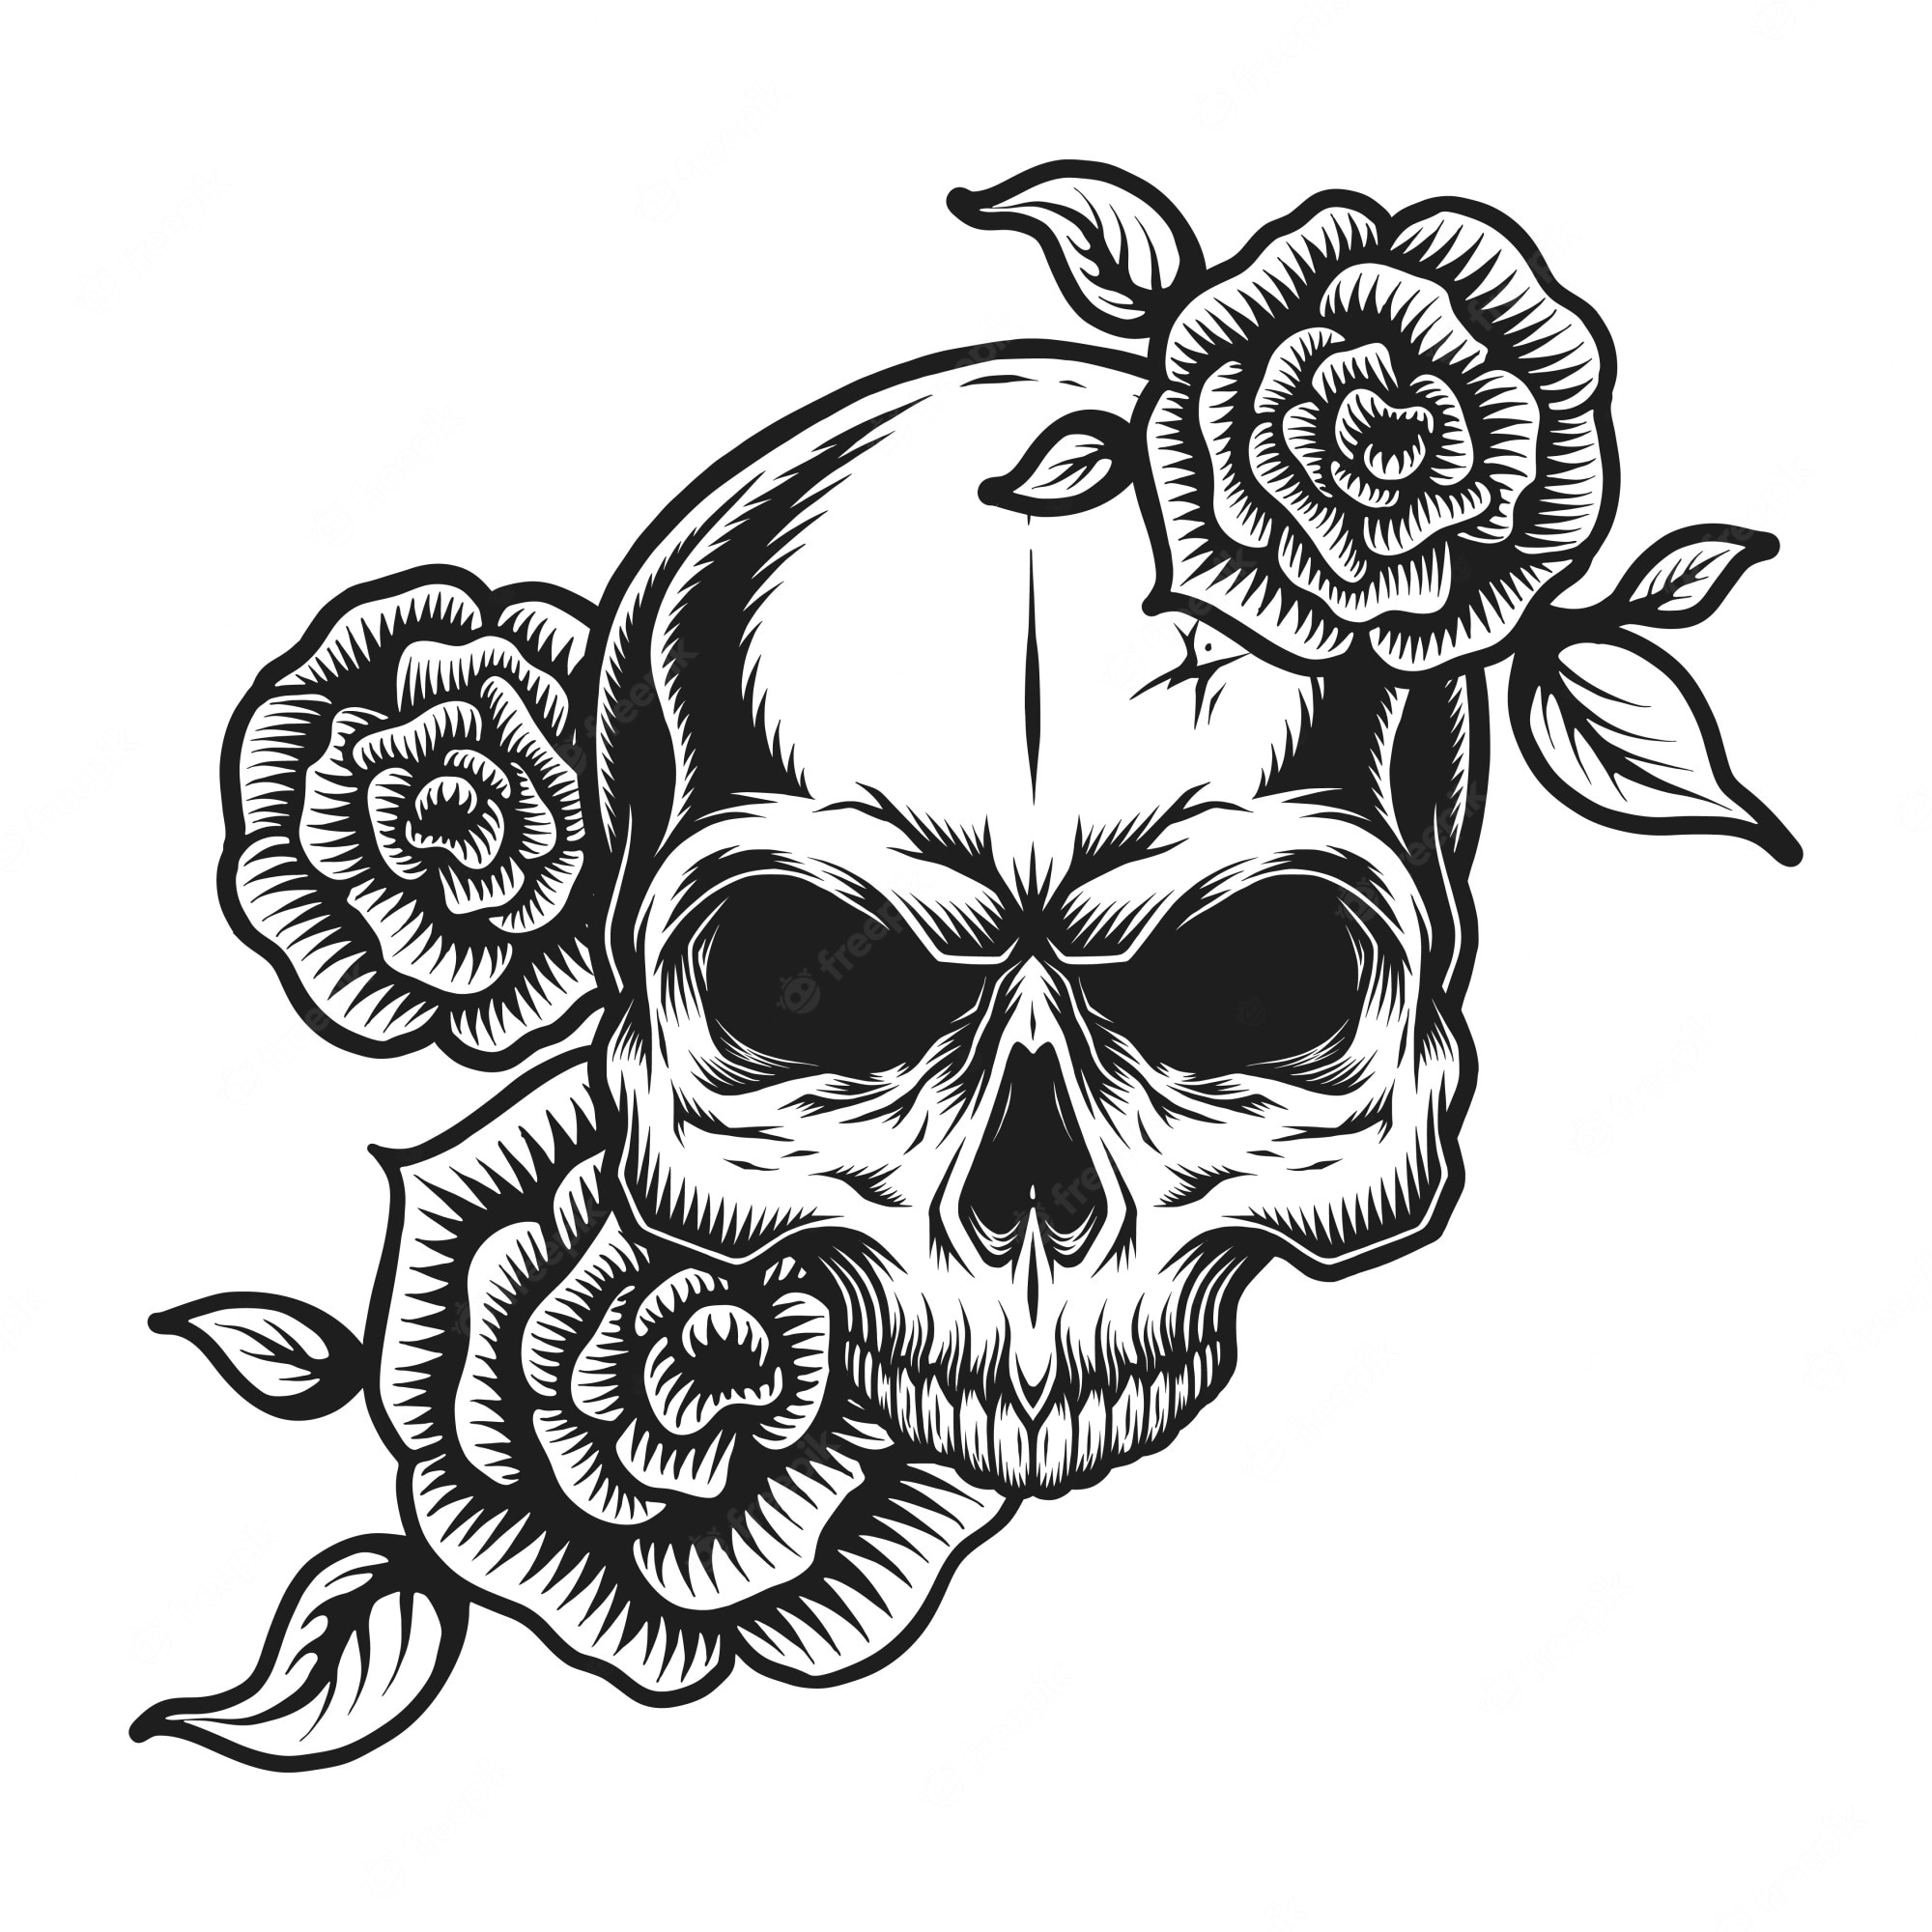 Skull tattoo images